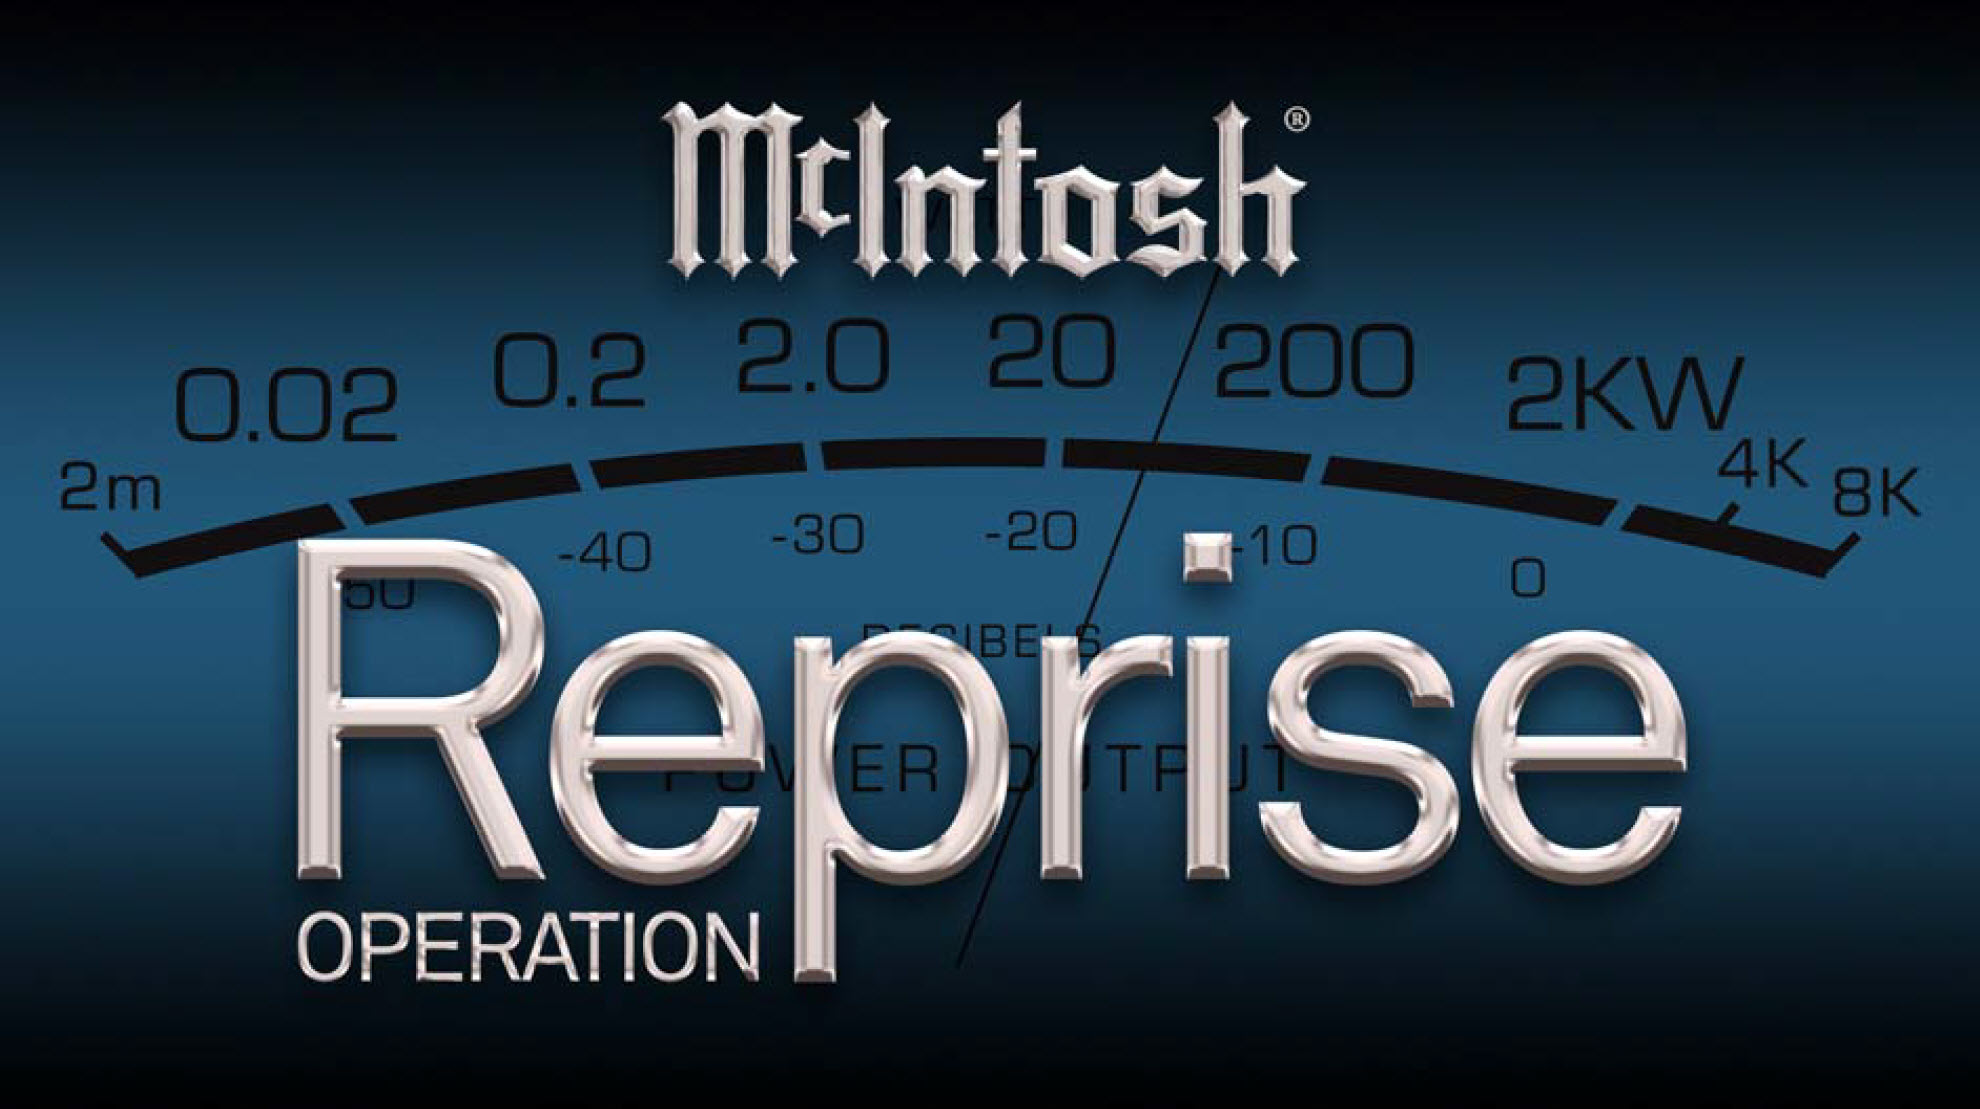 McIntosh Operation Reprise